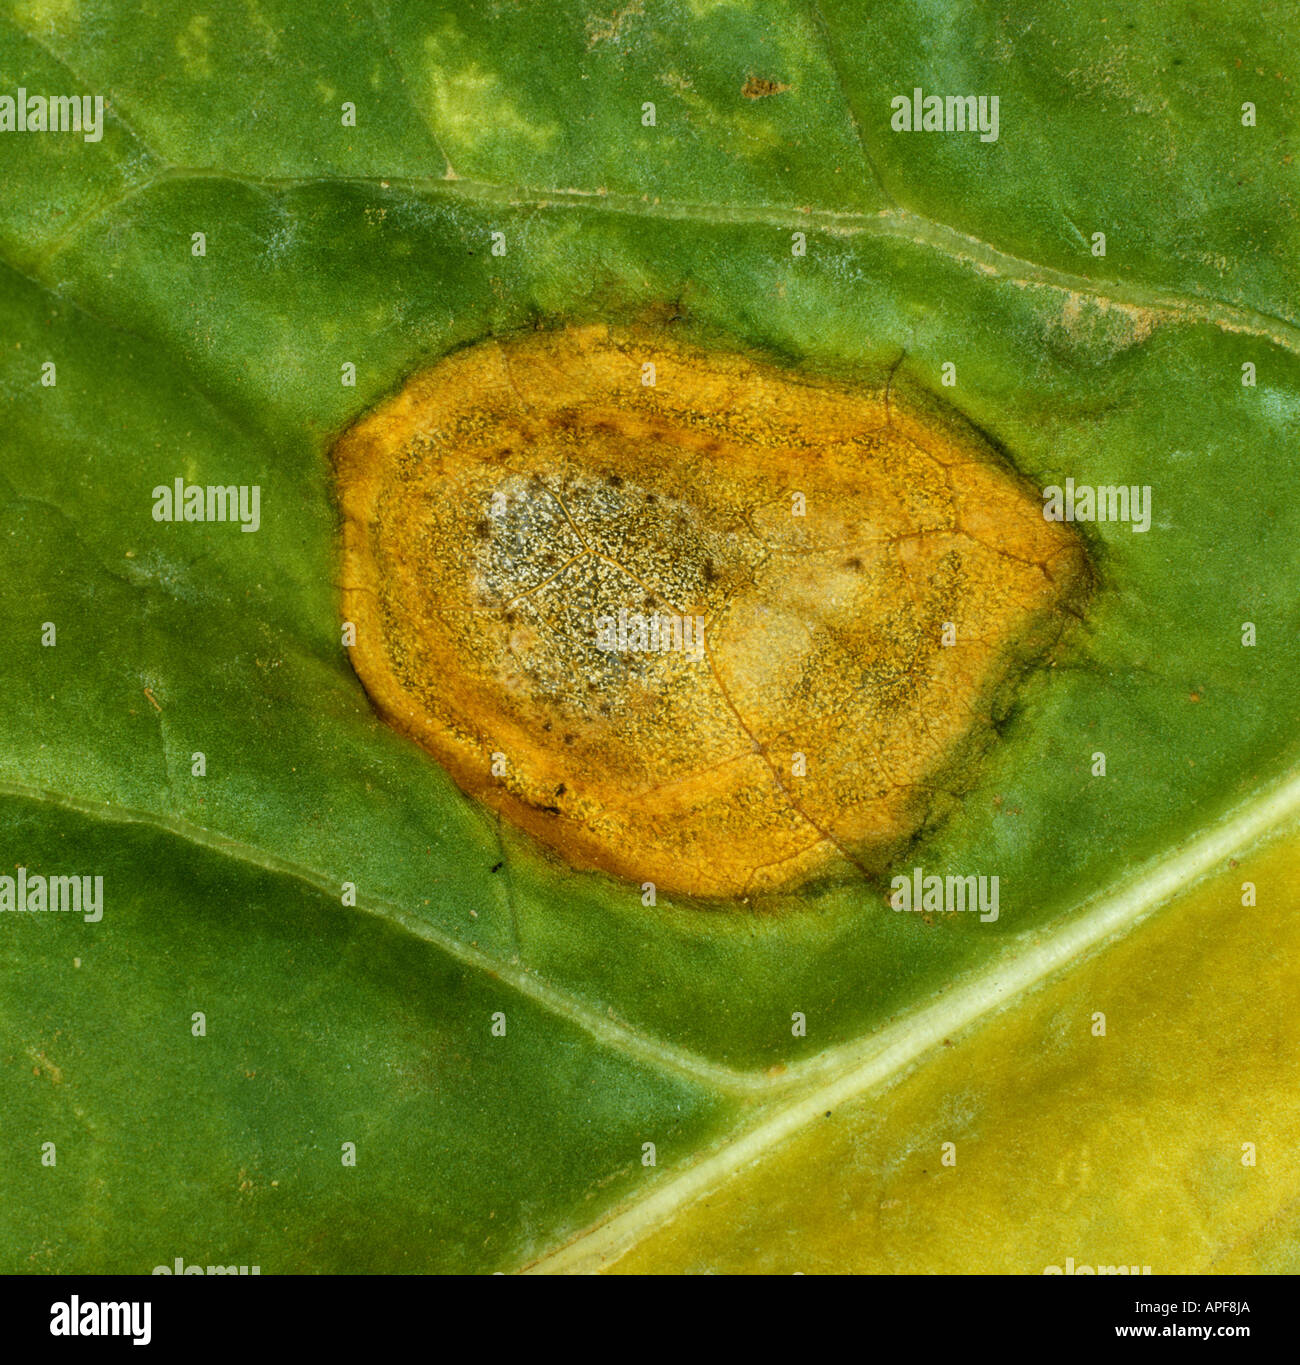 Phoma leaf spot Phoma sp lesion and pycnidia on a sugar beet leaf Stock Photo